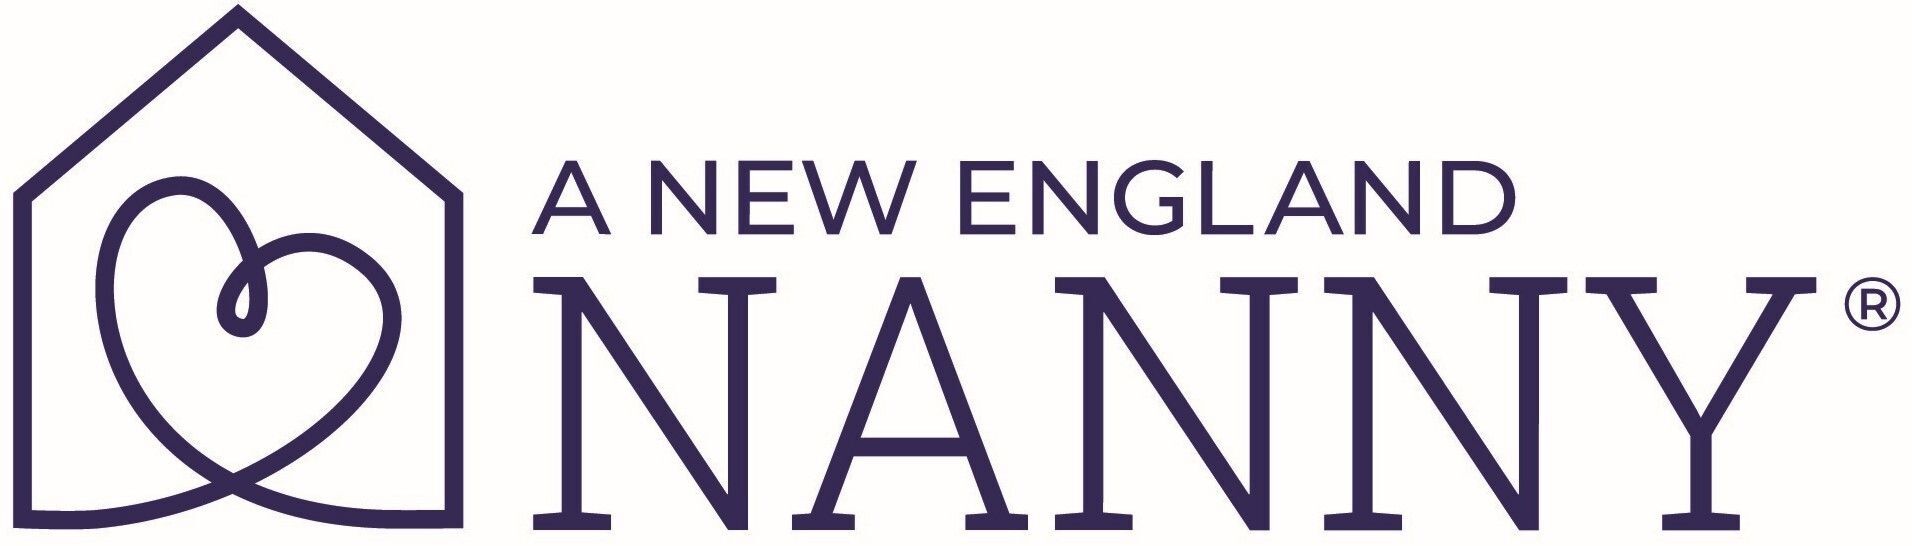 A New England Nanny